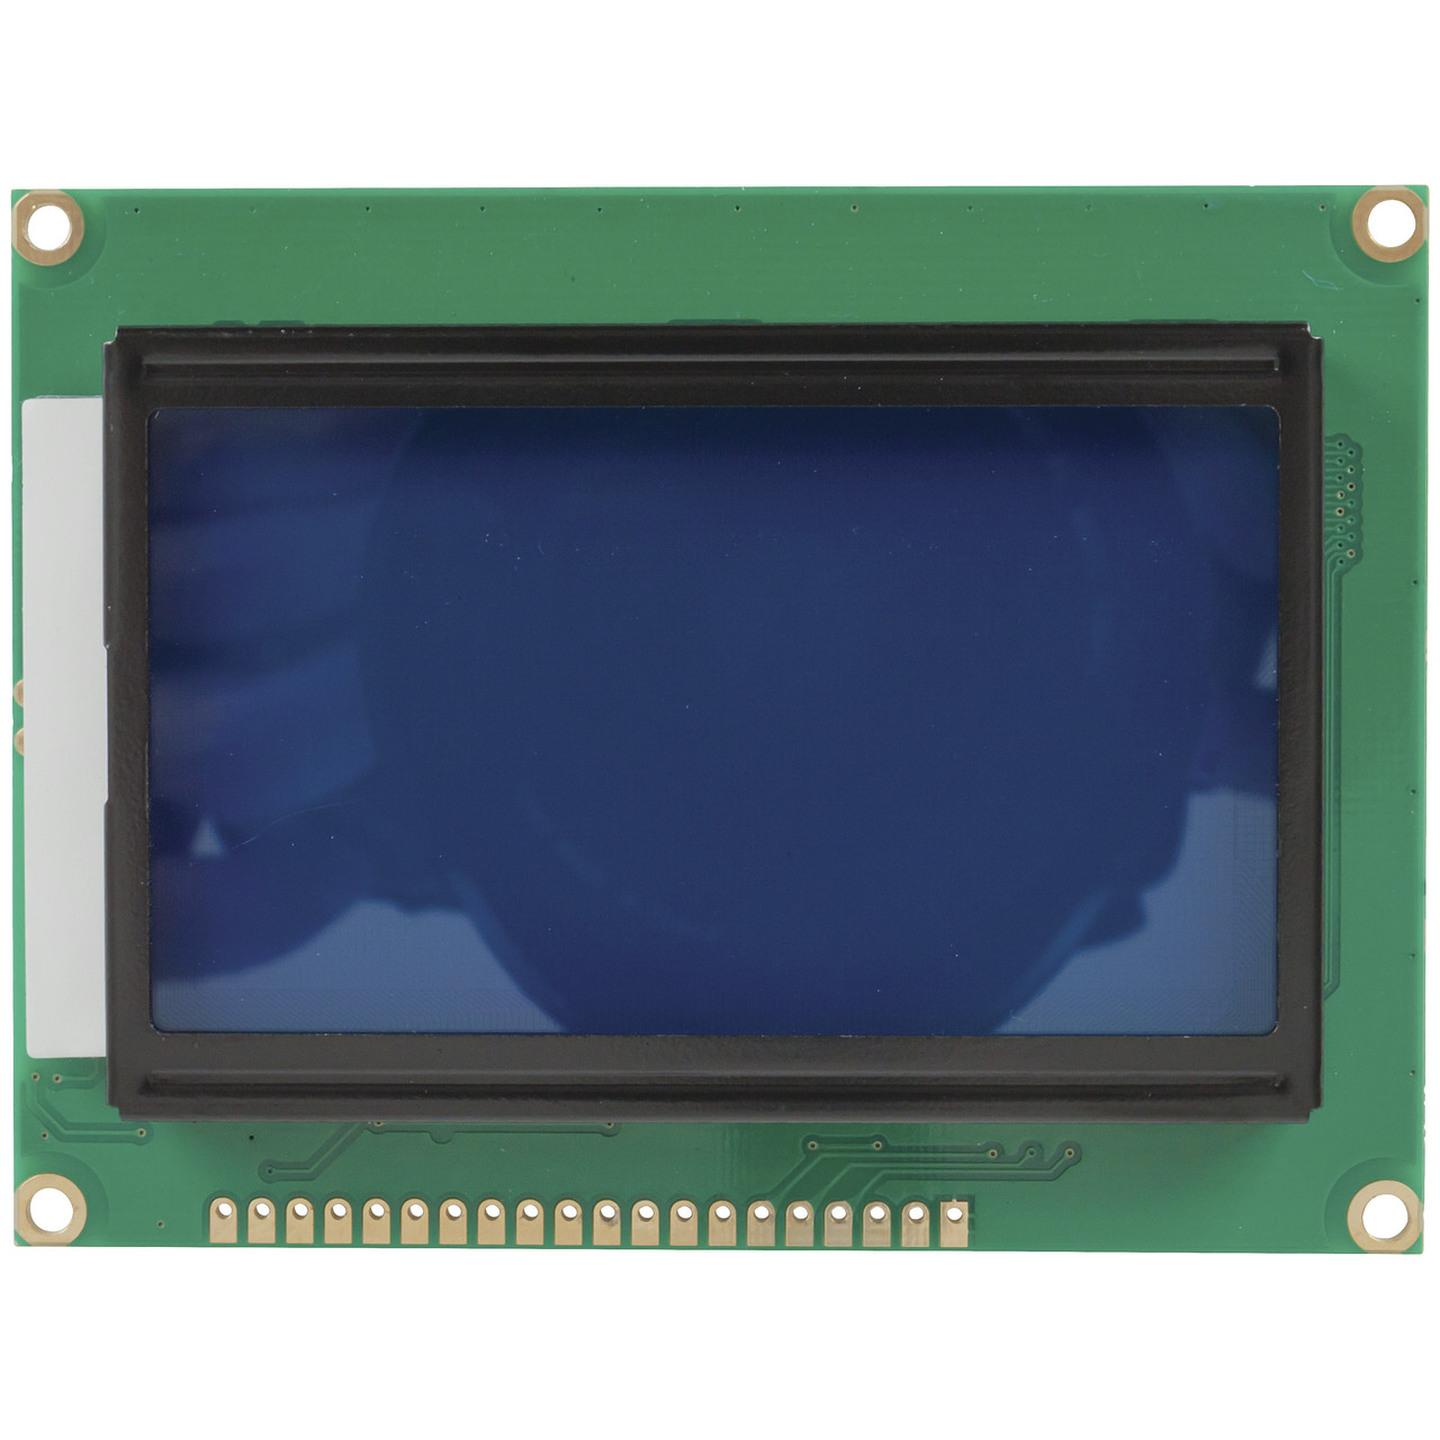 Arduino Compatible 128x64 Dot Matrix LCD Display Module